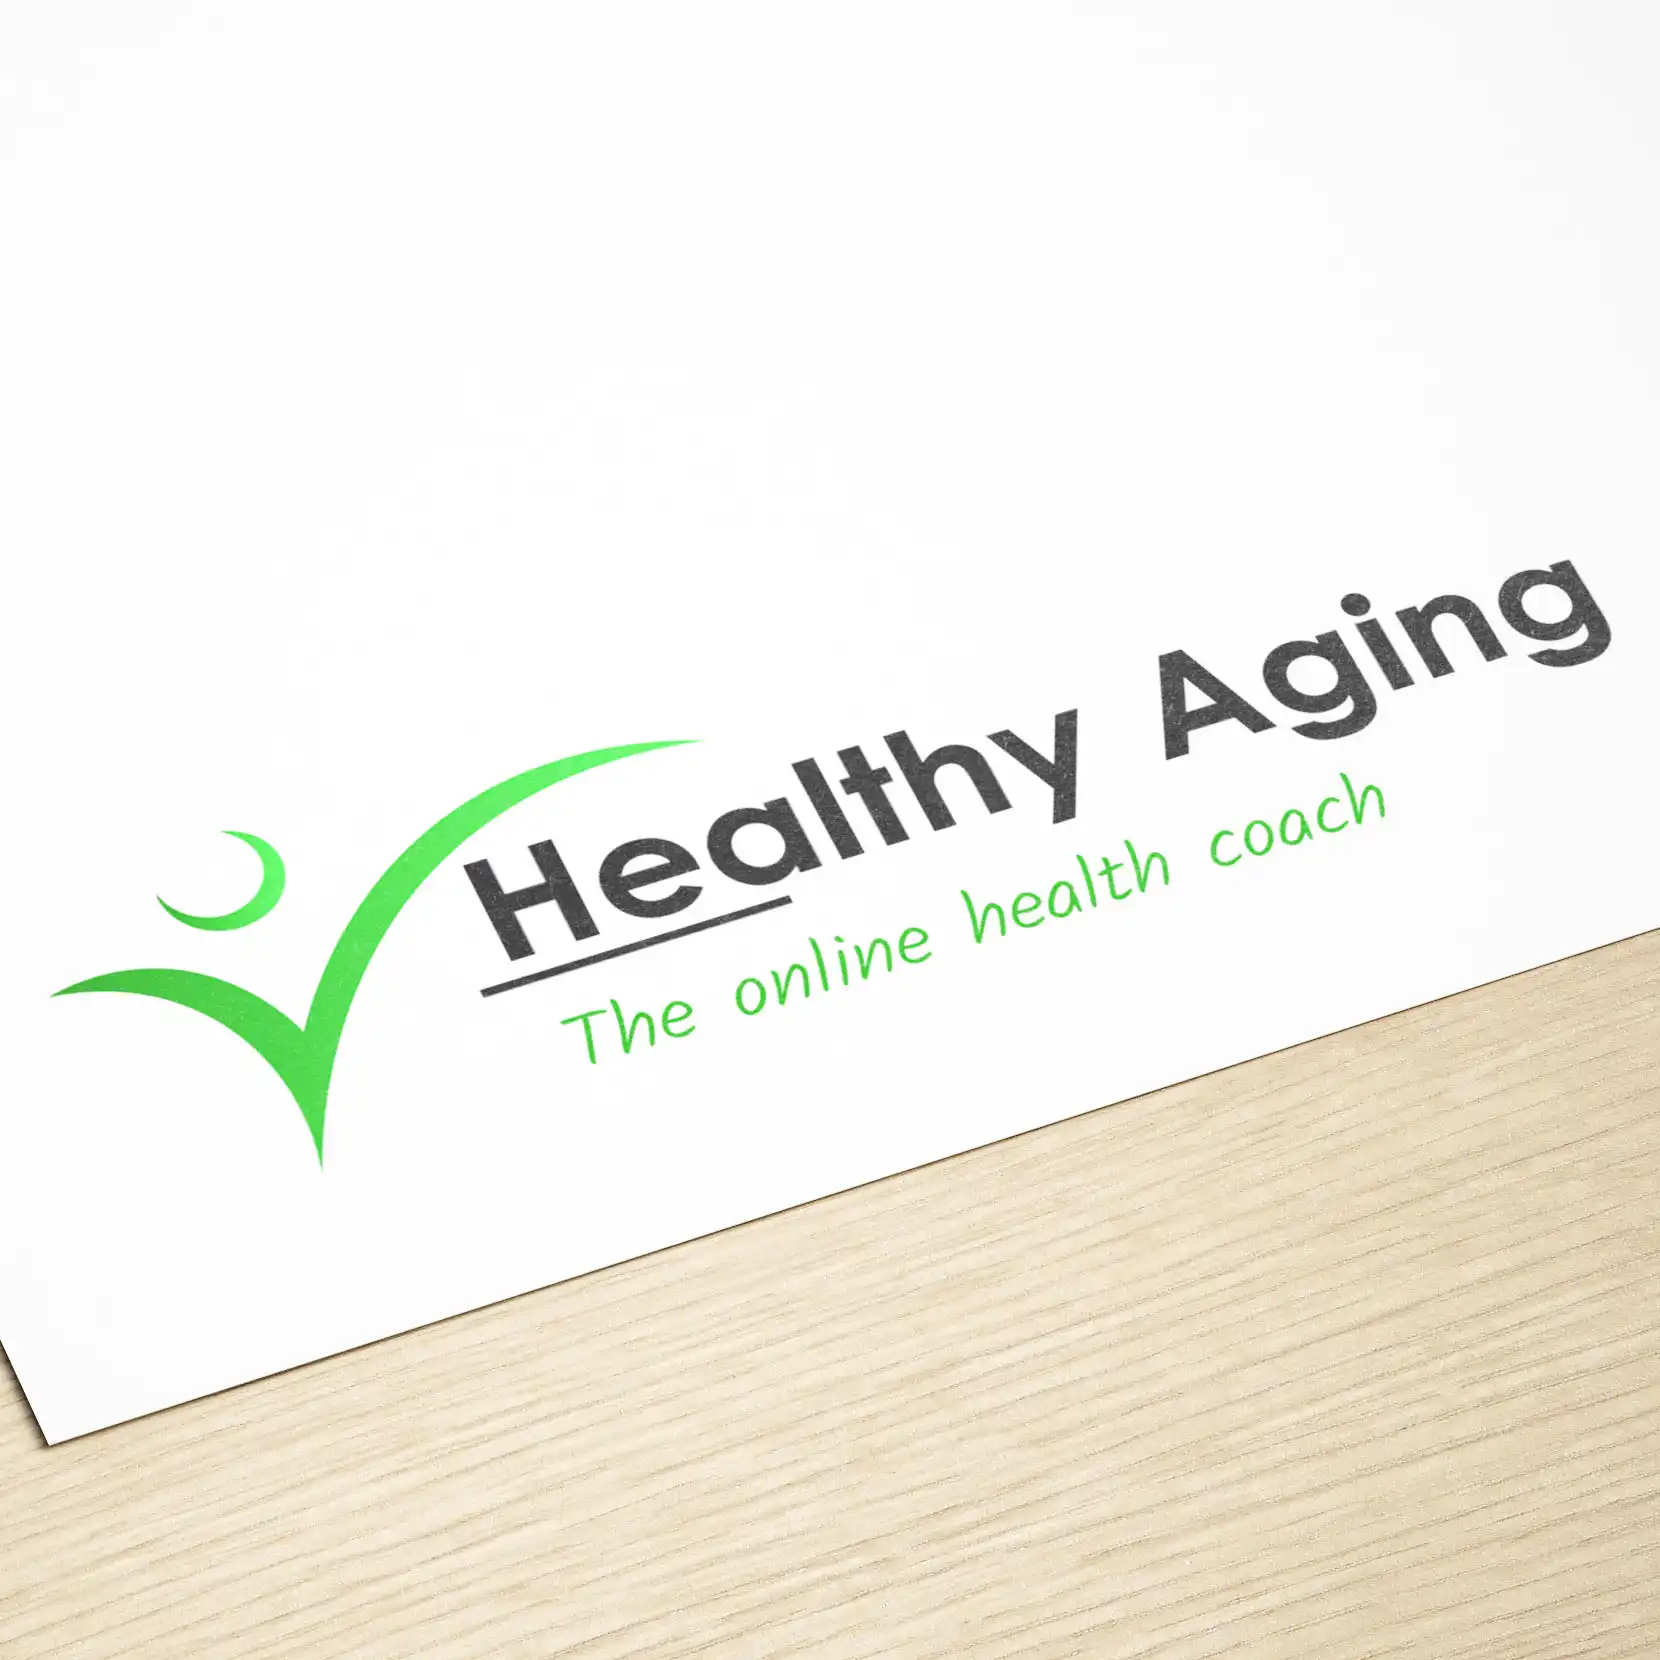 Healthy aging logo design